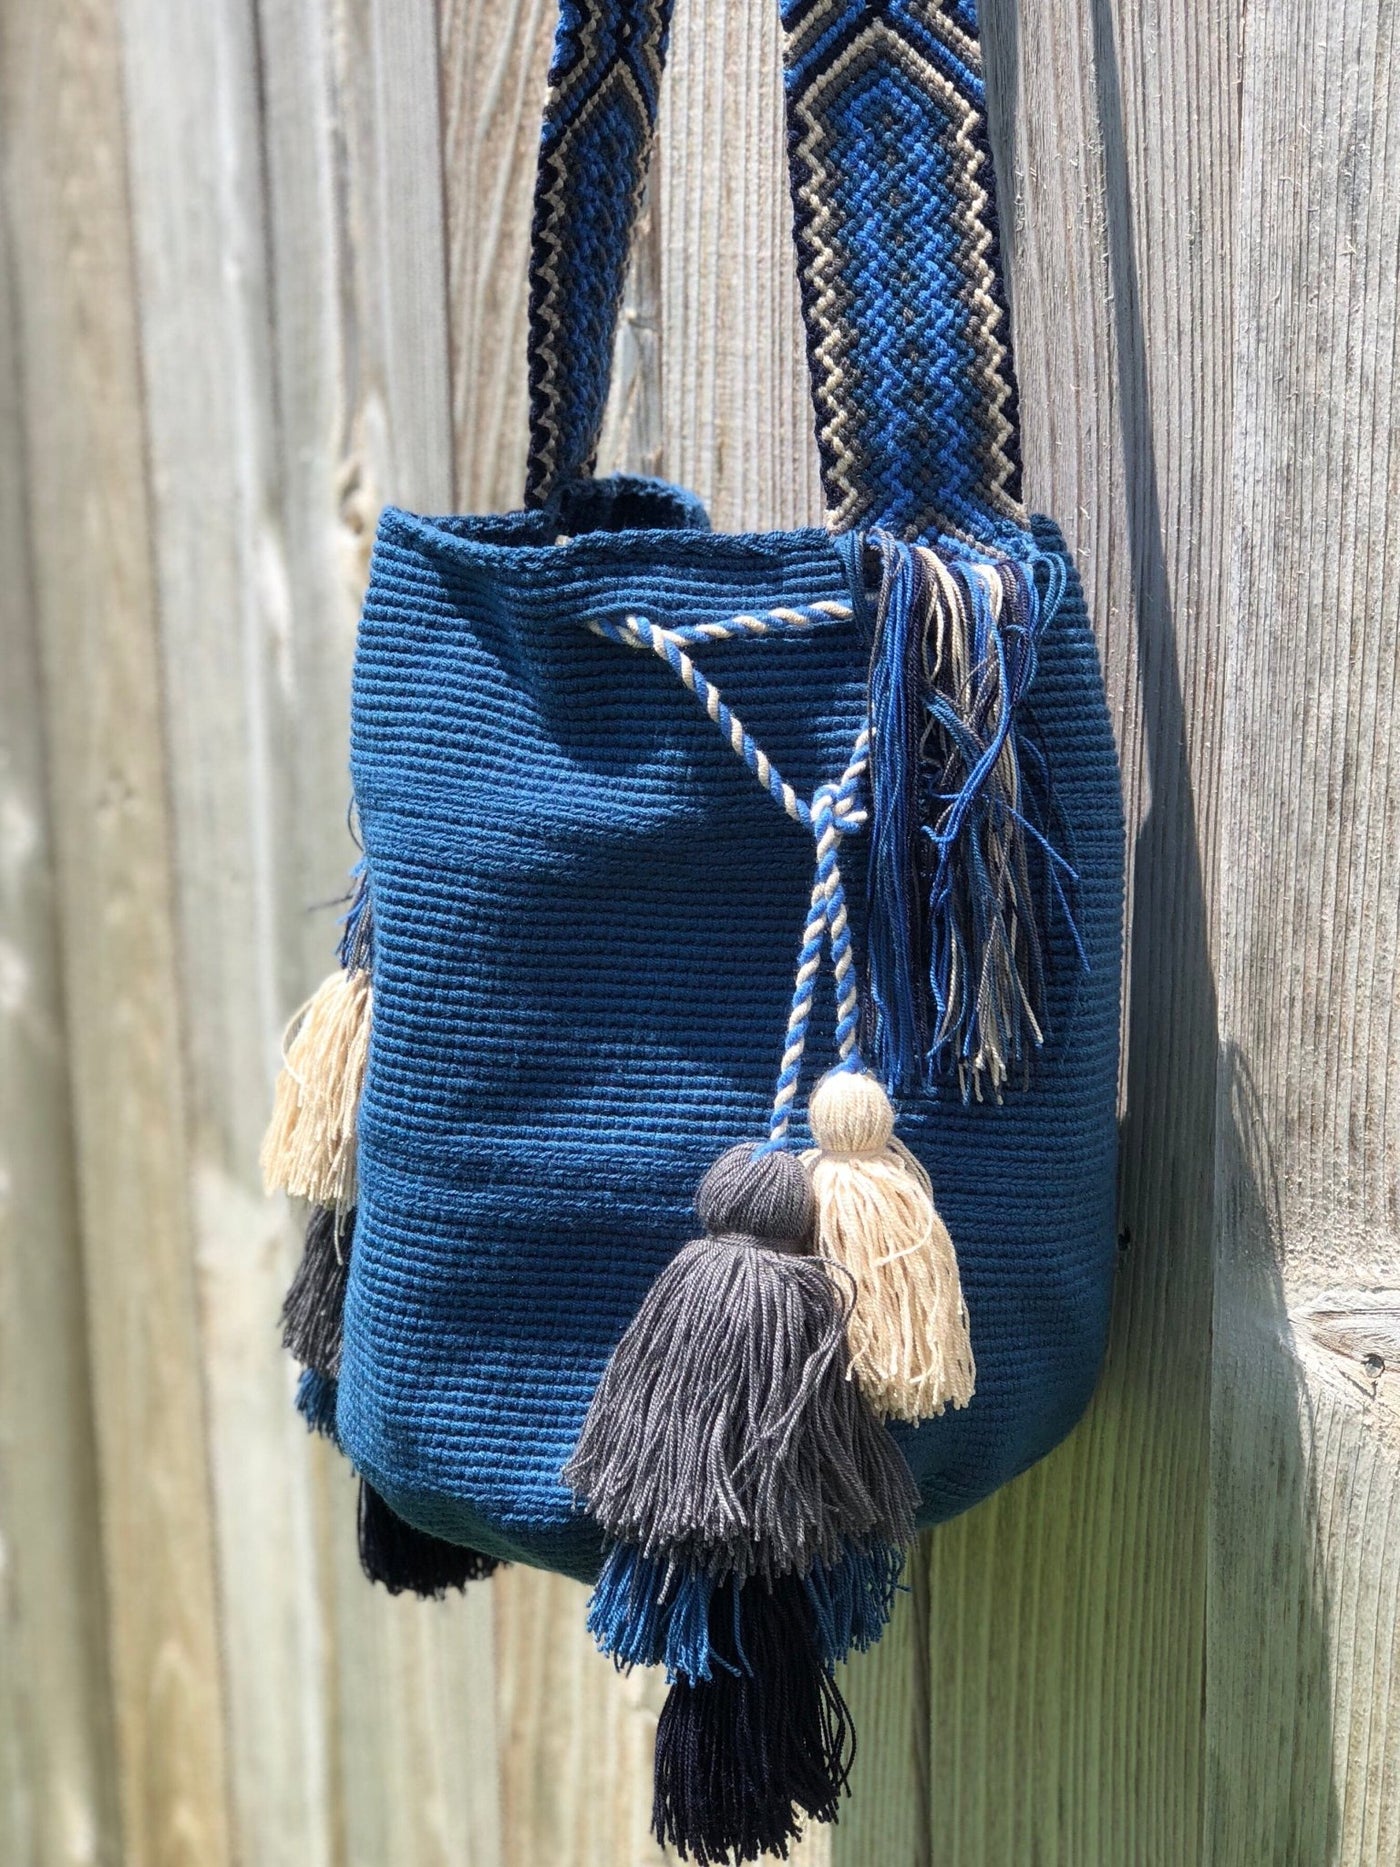 Bohemian Bags with Multi - Tassels and Macrame Strap - Colorful 4U - Crochet Boho Bag with Tassels - Crossbody Bucket Bag